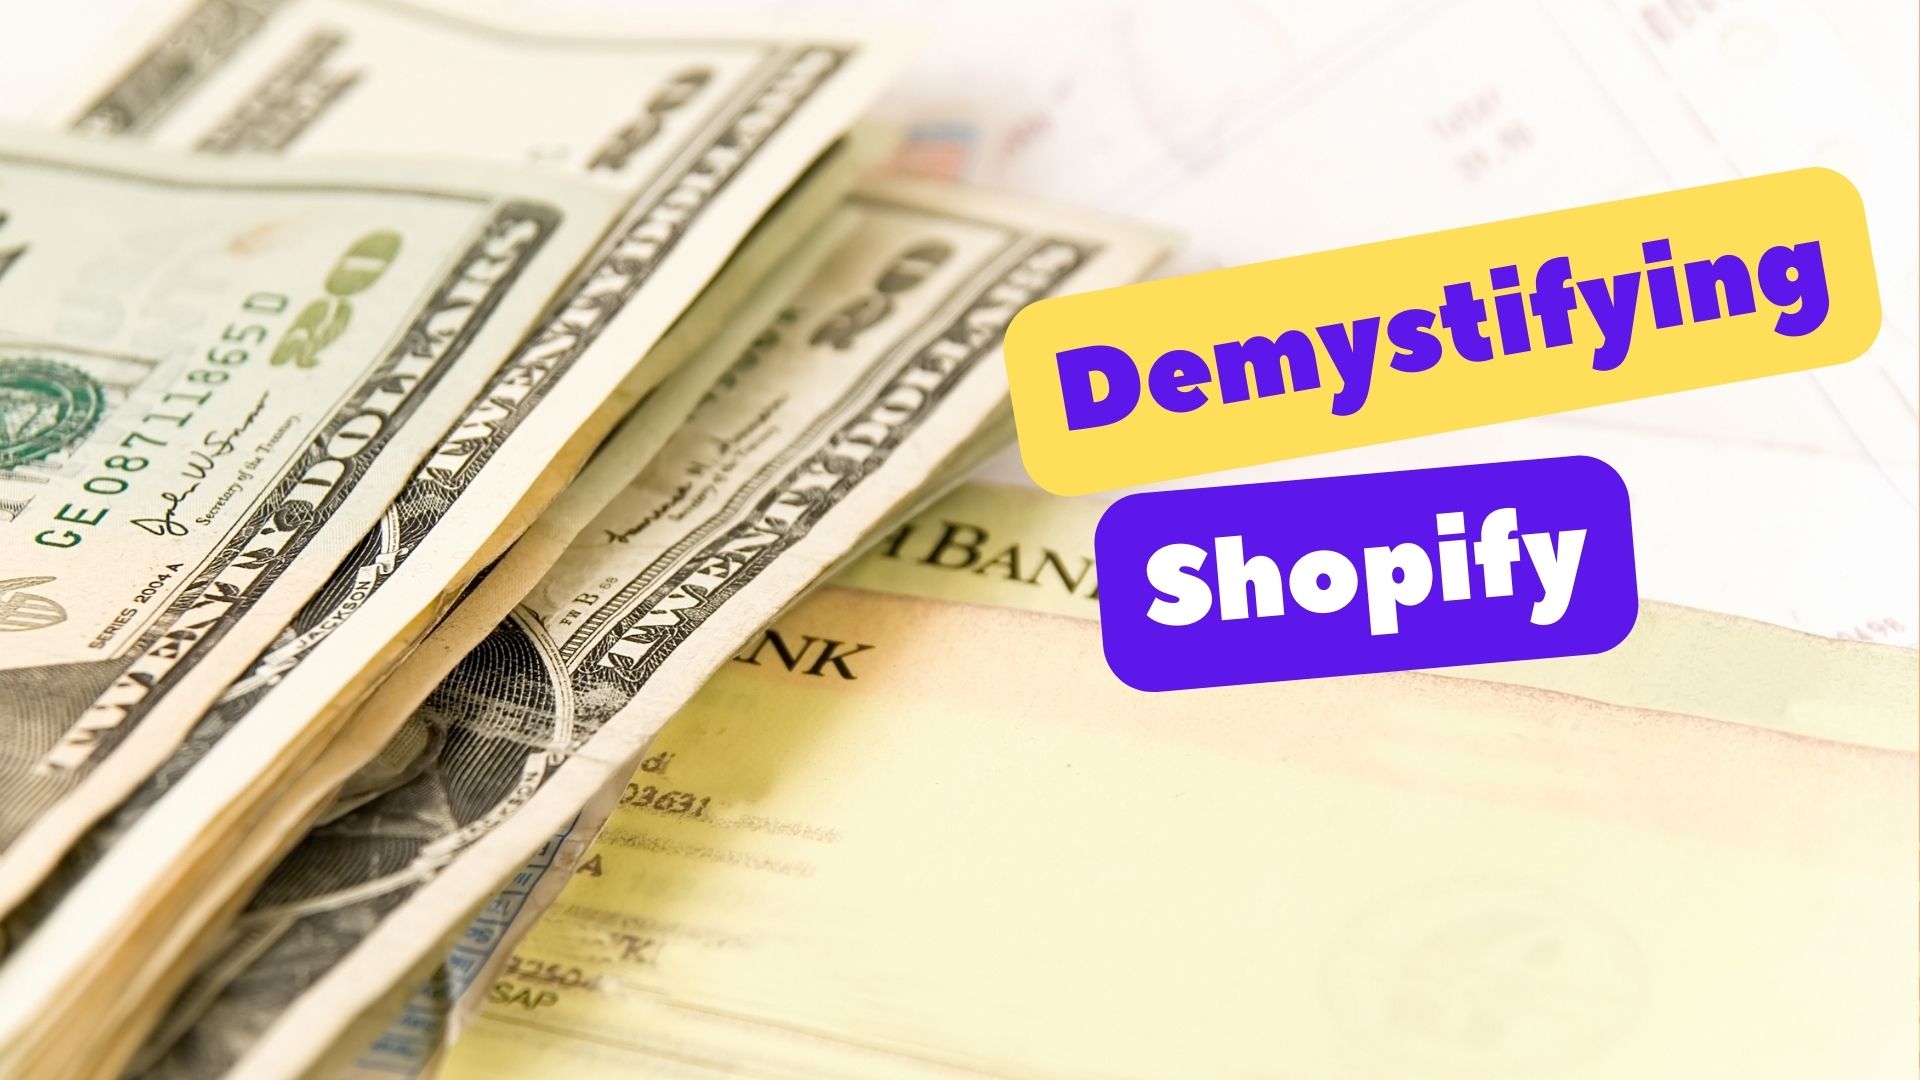 Demystifying Shopify